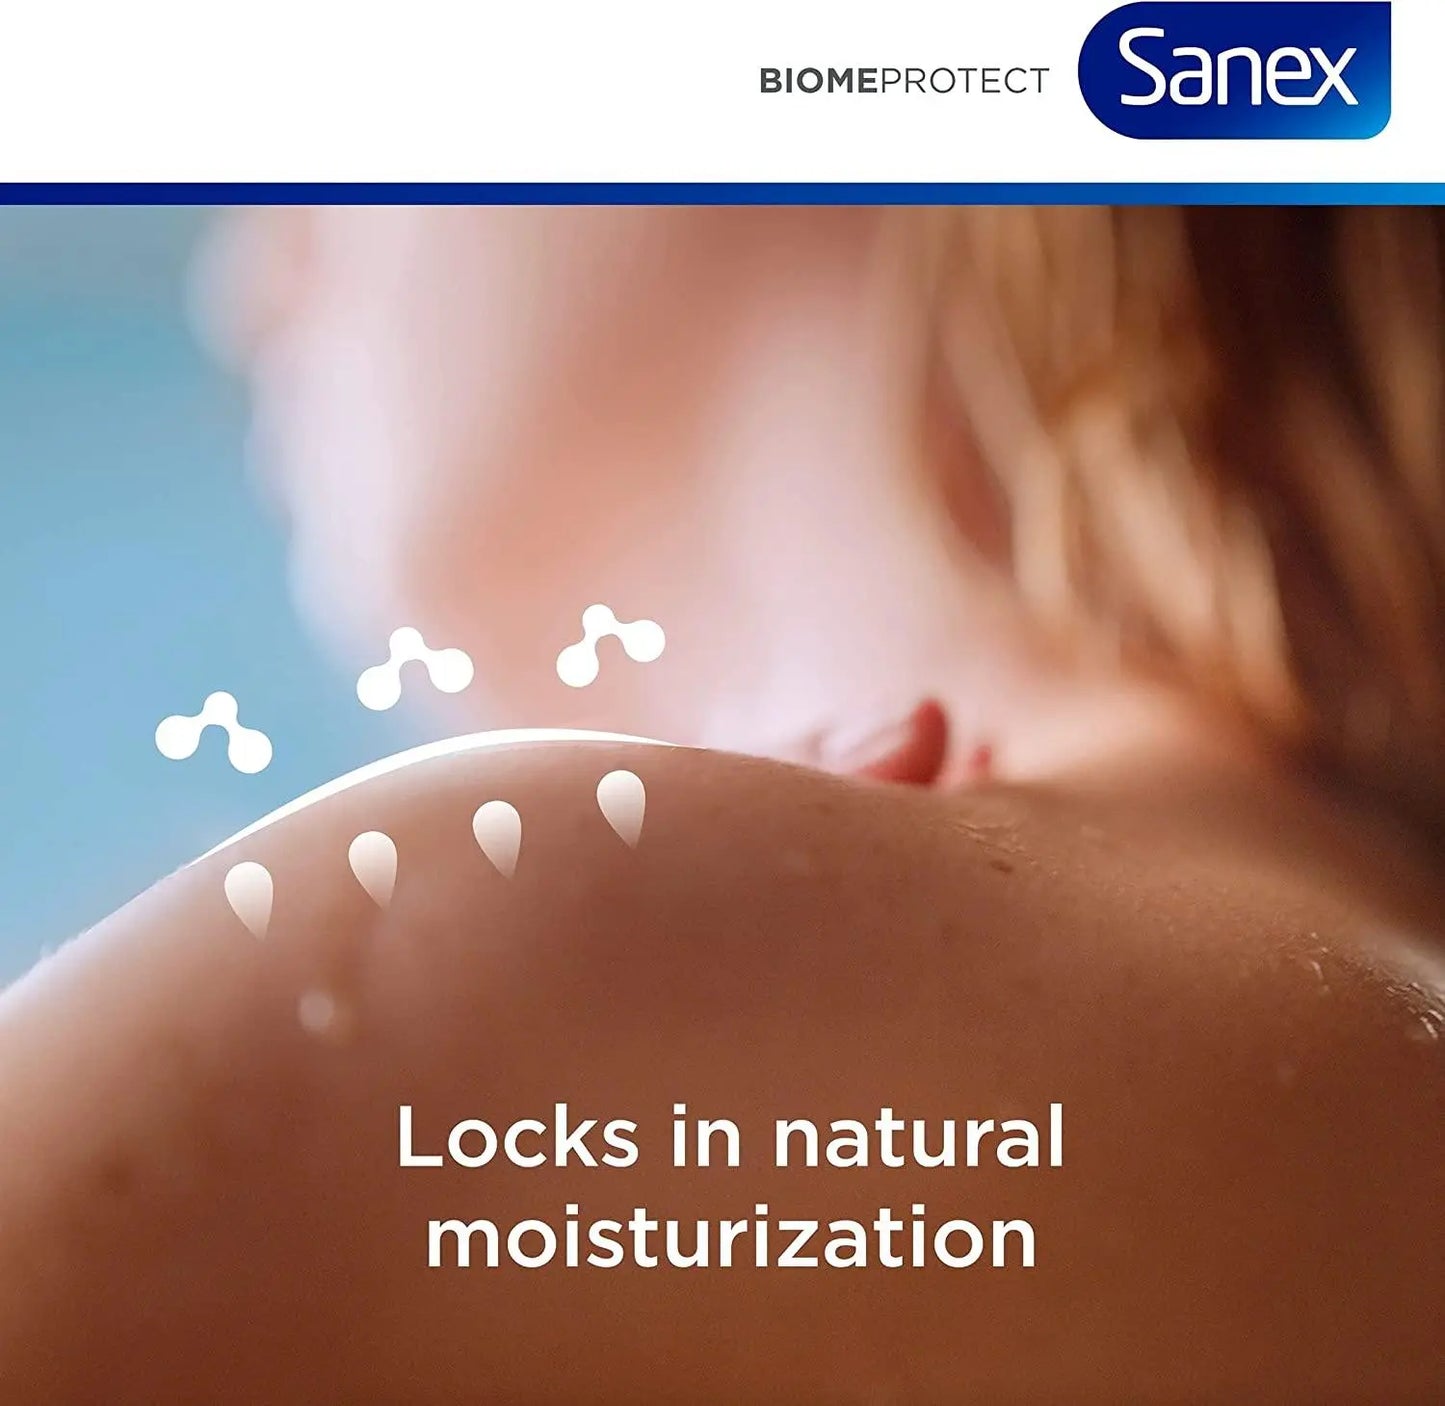 Sanex Biomeprotect Hypoallergenic Shower Gel 450Ml